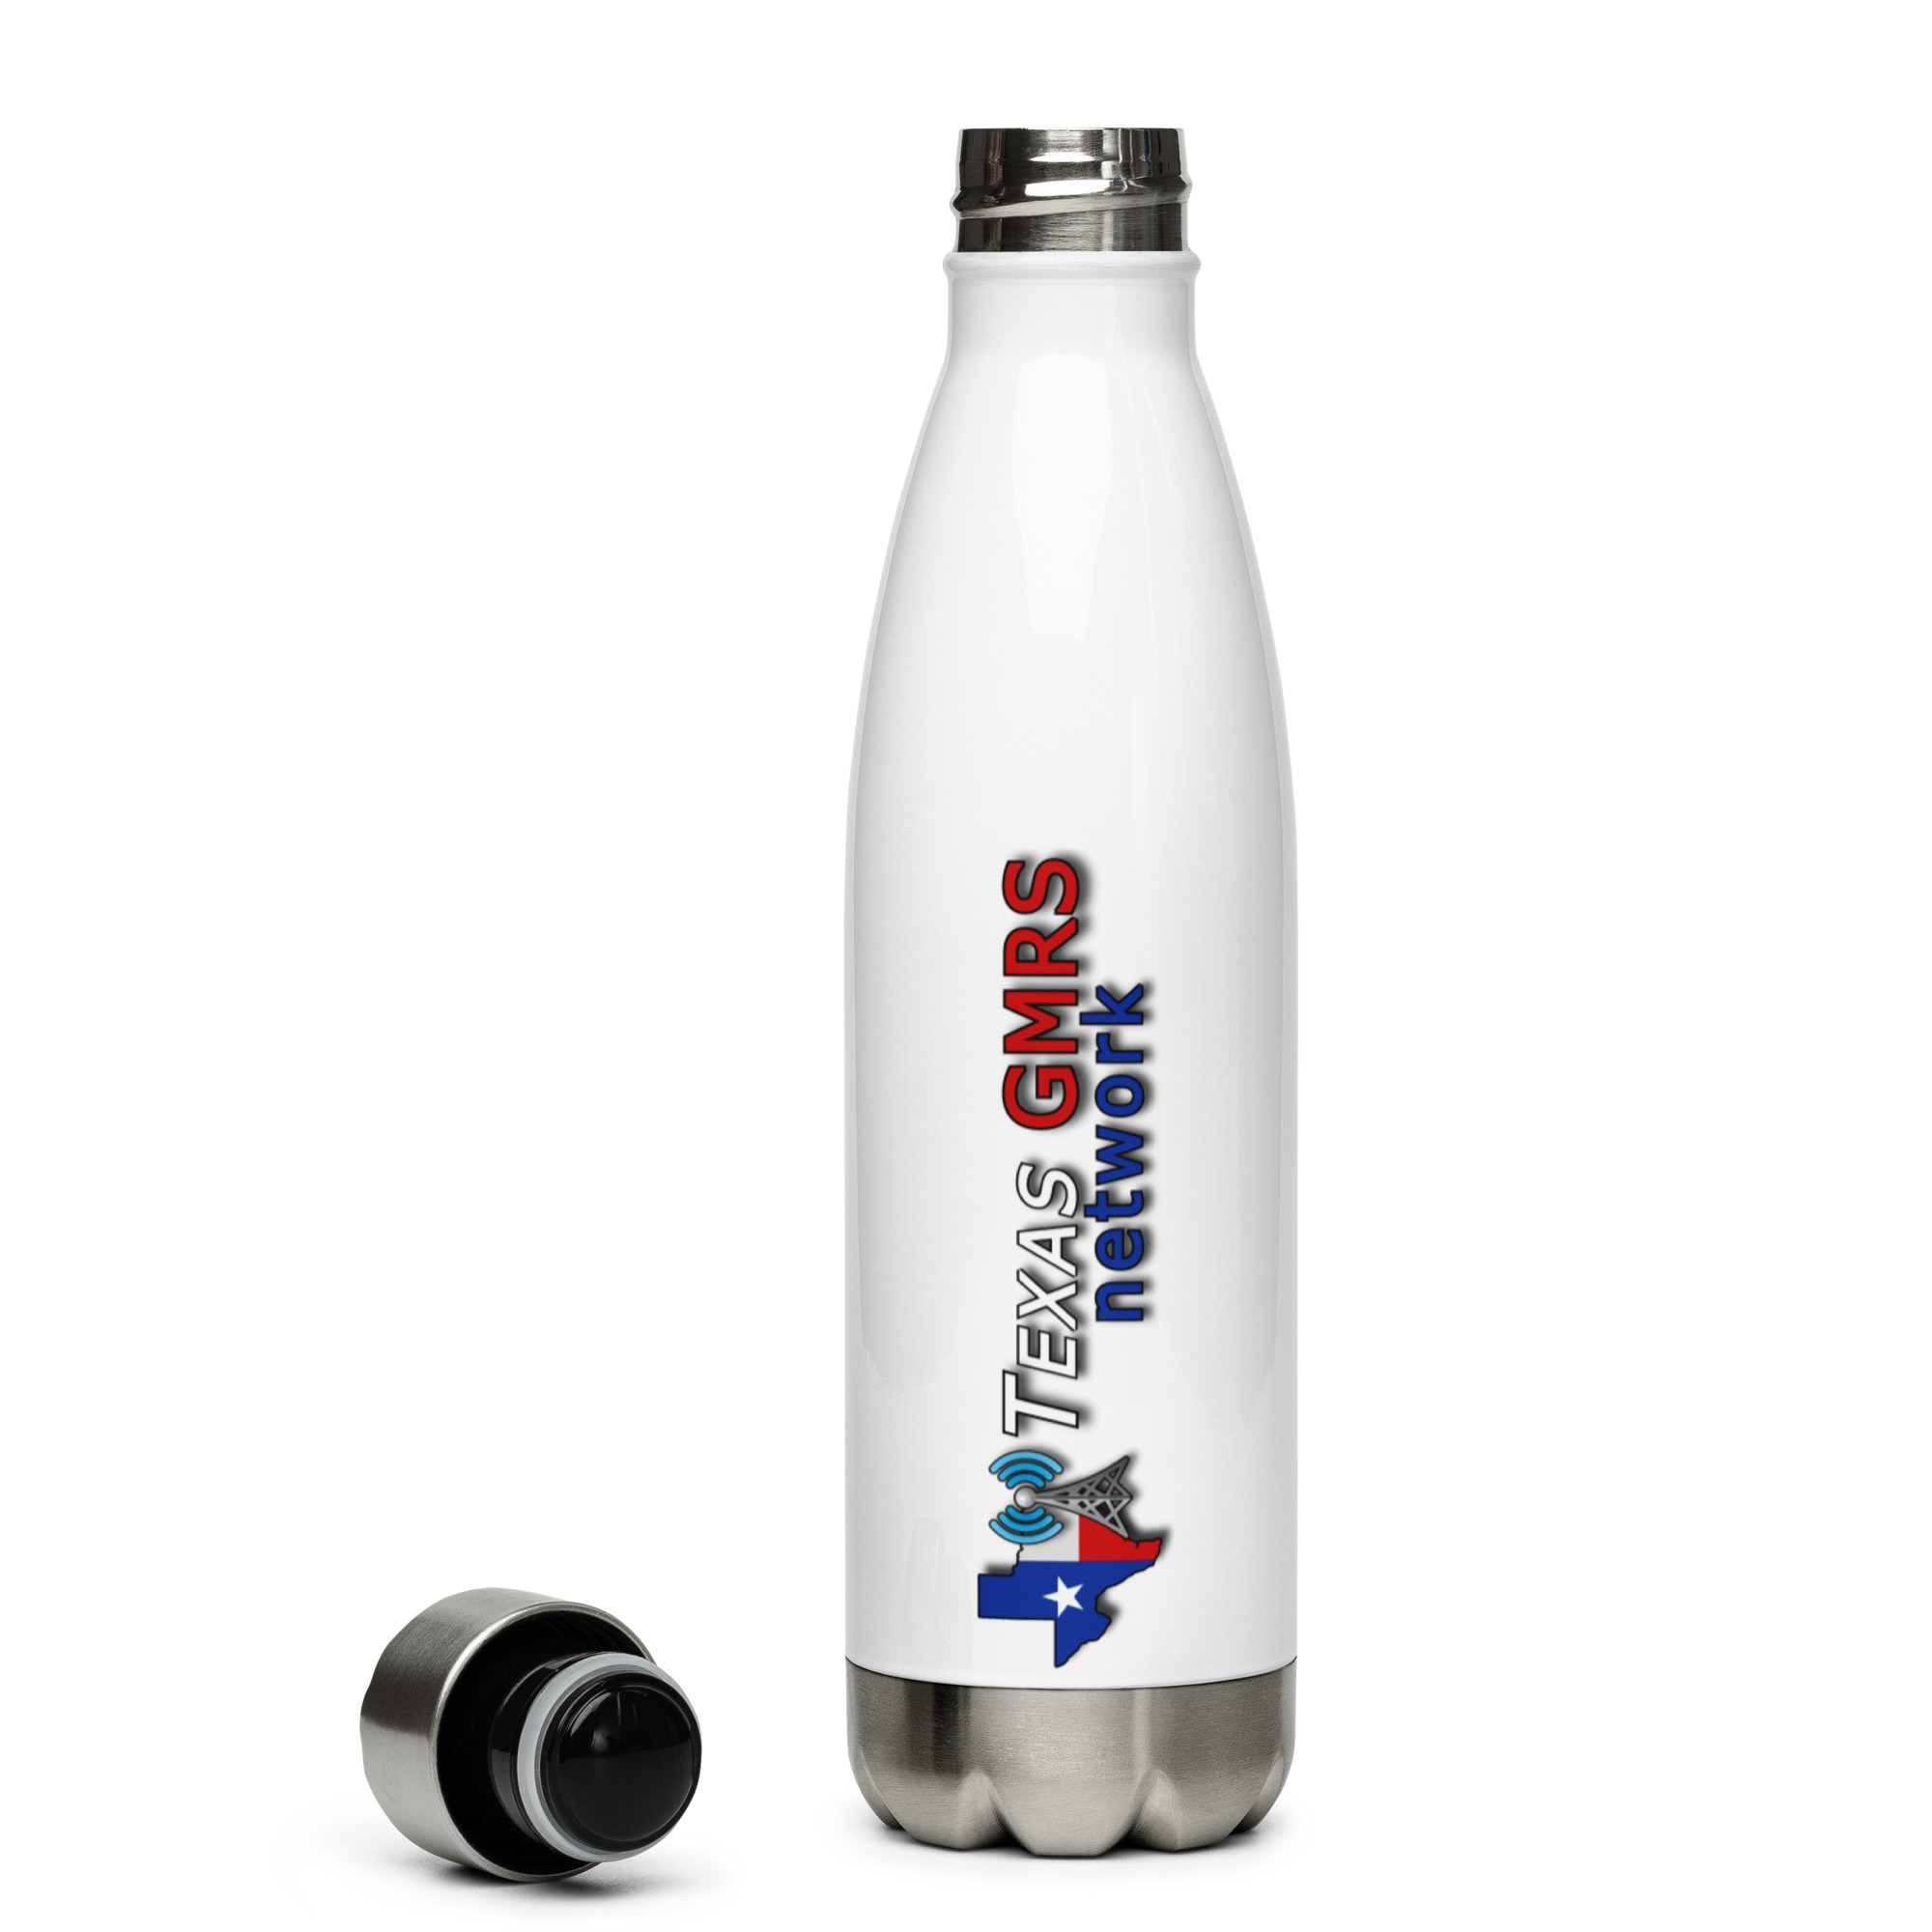 https://www.texasgmrs.net/wp-content/uploads/2022/10/stainless-steel-water-bottle-white-17oz-front-6358abbcddb7b.jpg